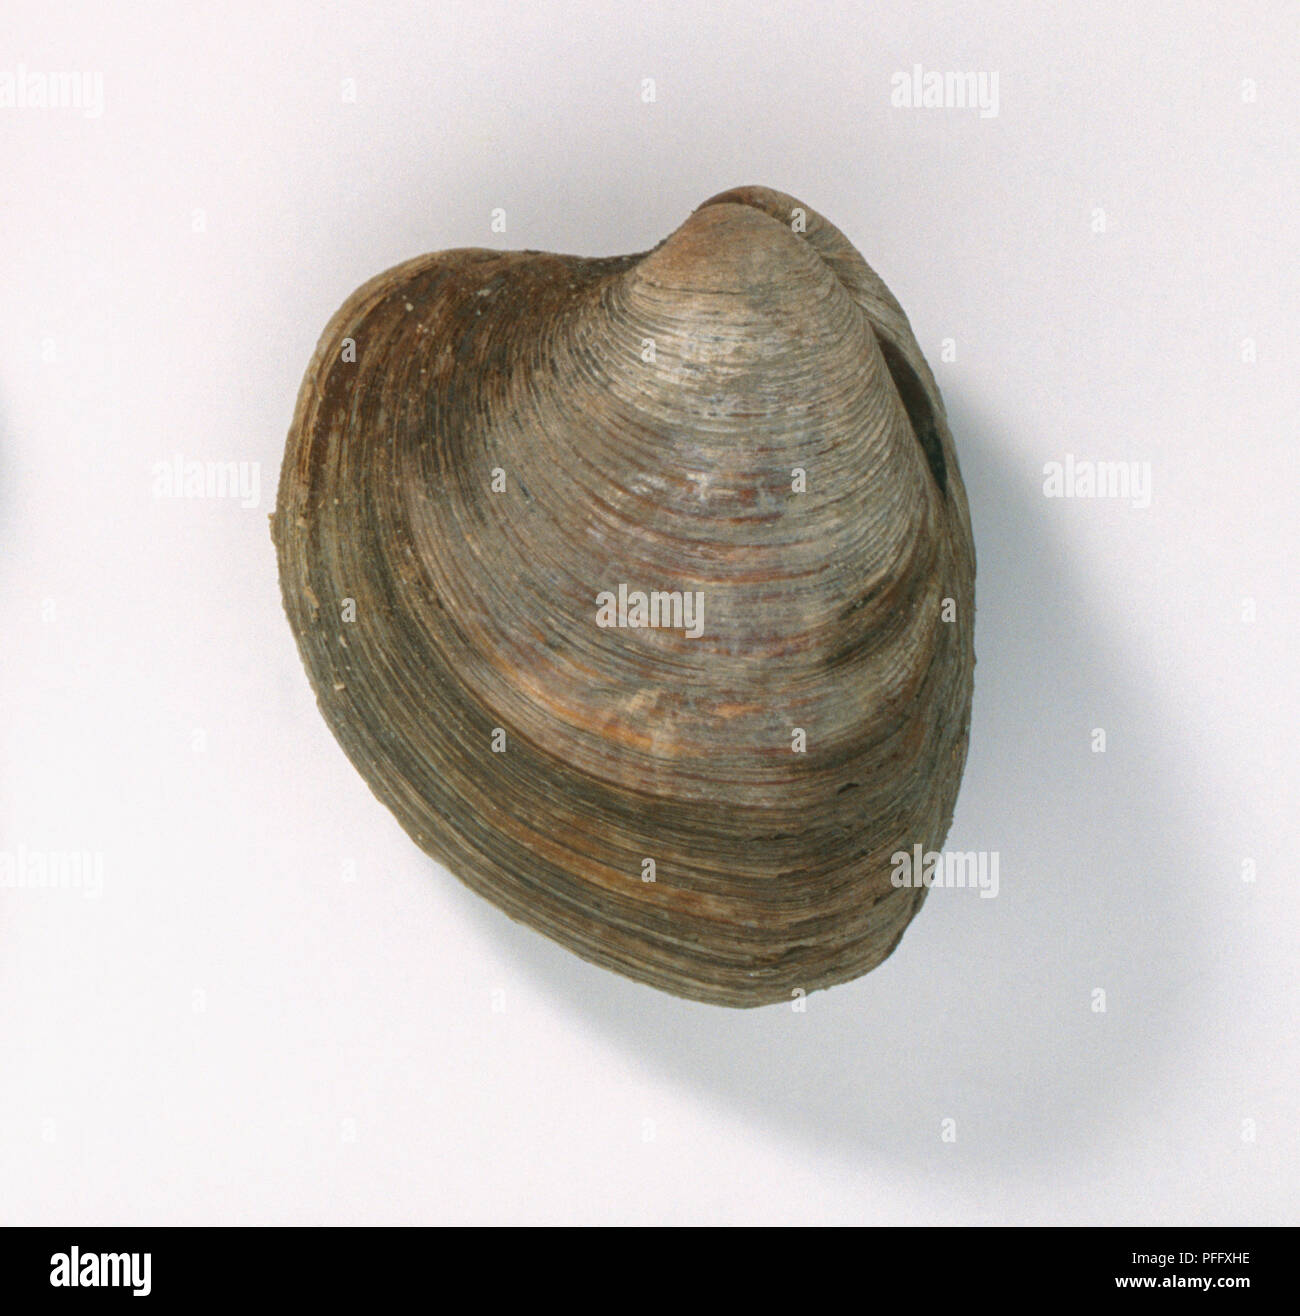 Quahog or hard clam (Mercenaria mercenaria), close-up Stock Photo